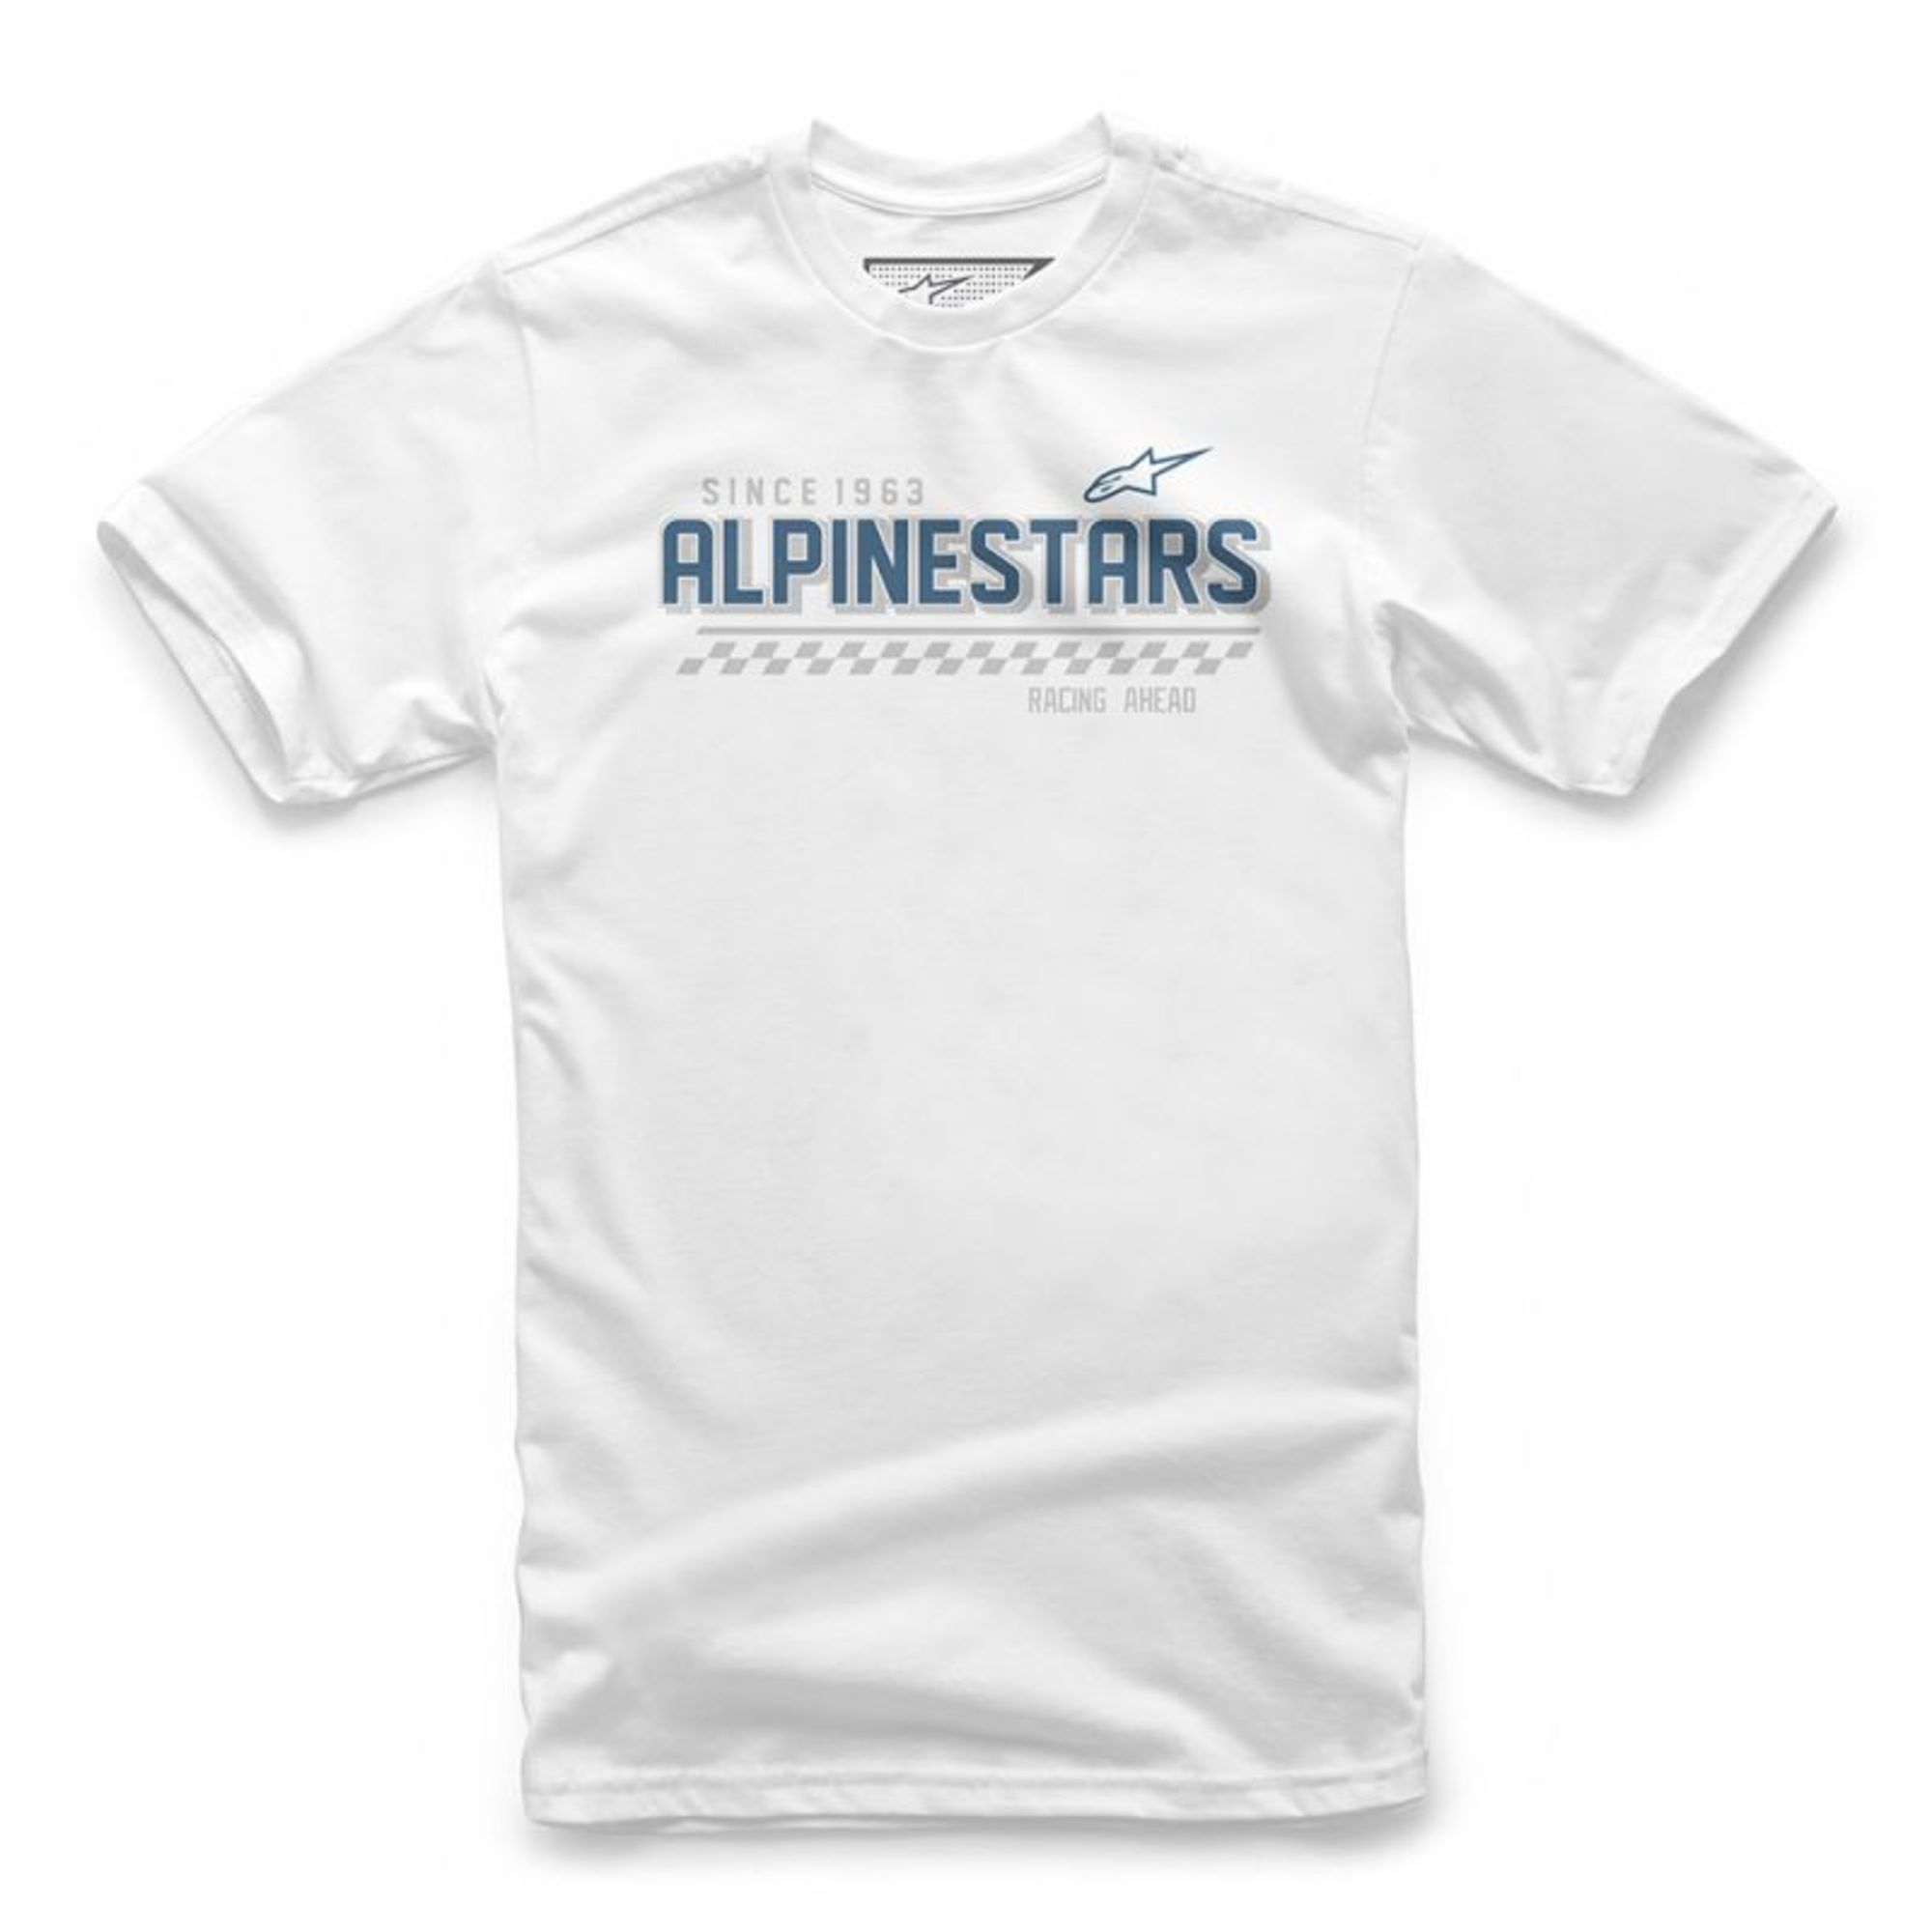 alpinestars t-shirt shirts for men coronal